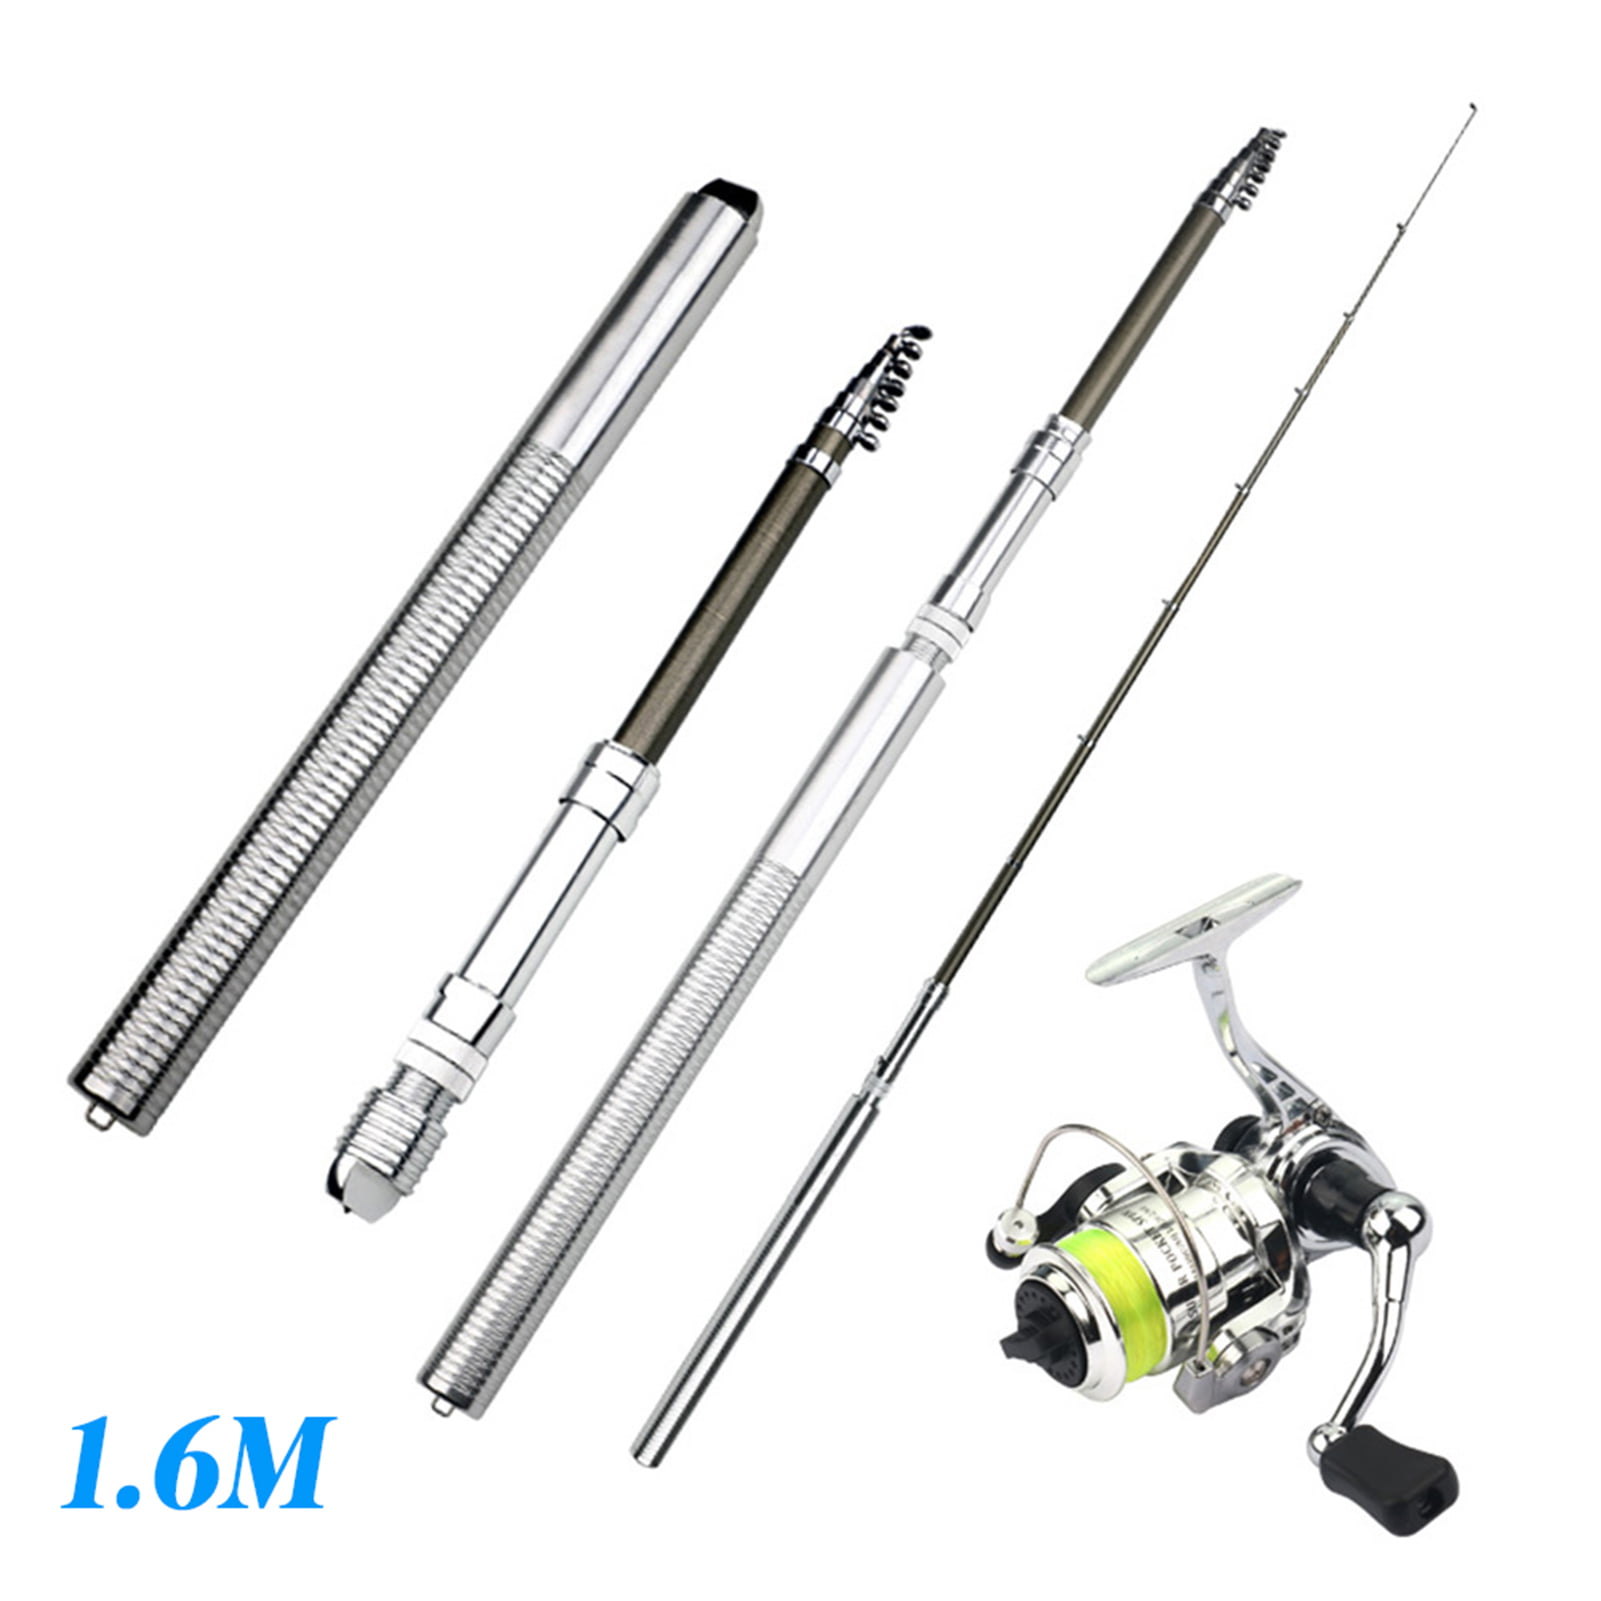 Telescopic Fishing Rod & Reel Combo Set Spinning Pole Carbon Fiber 11ft Portable 